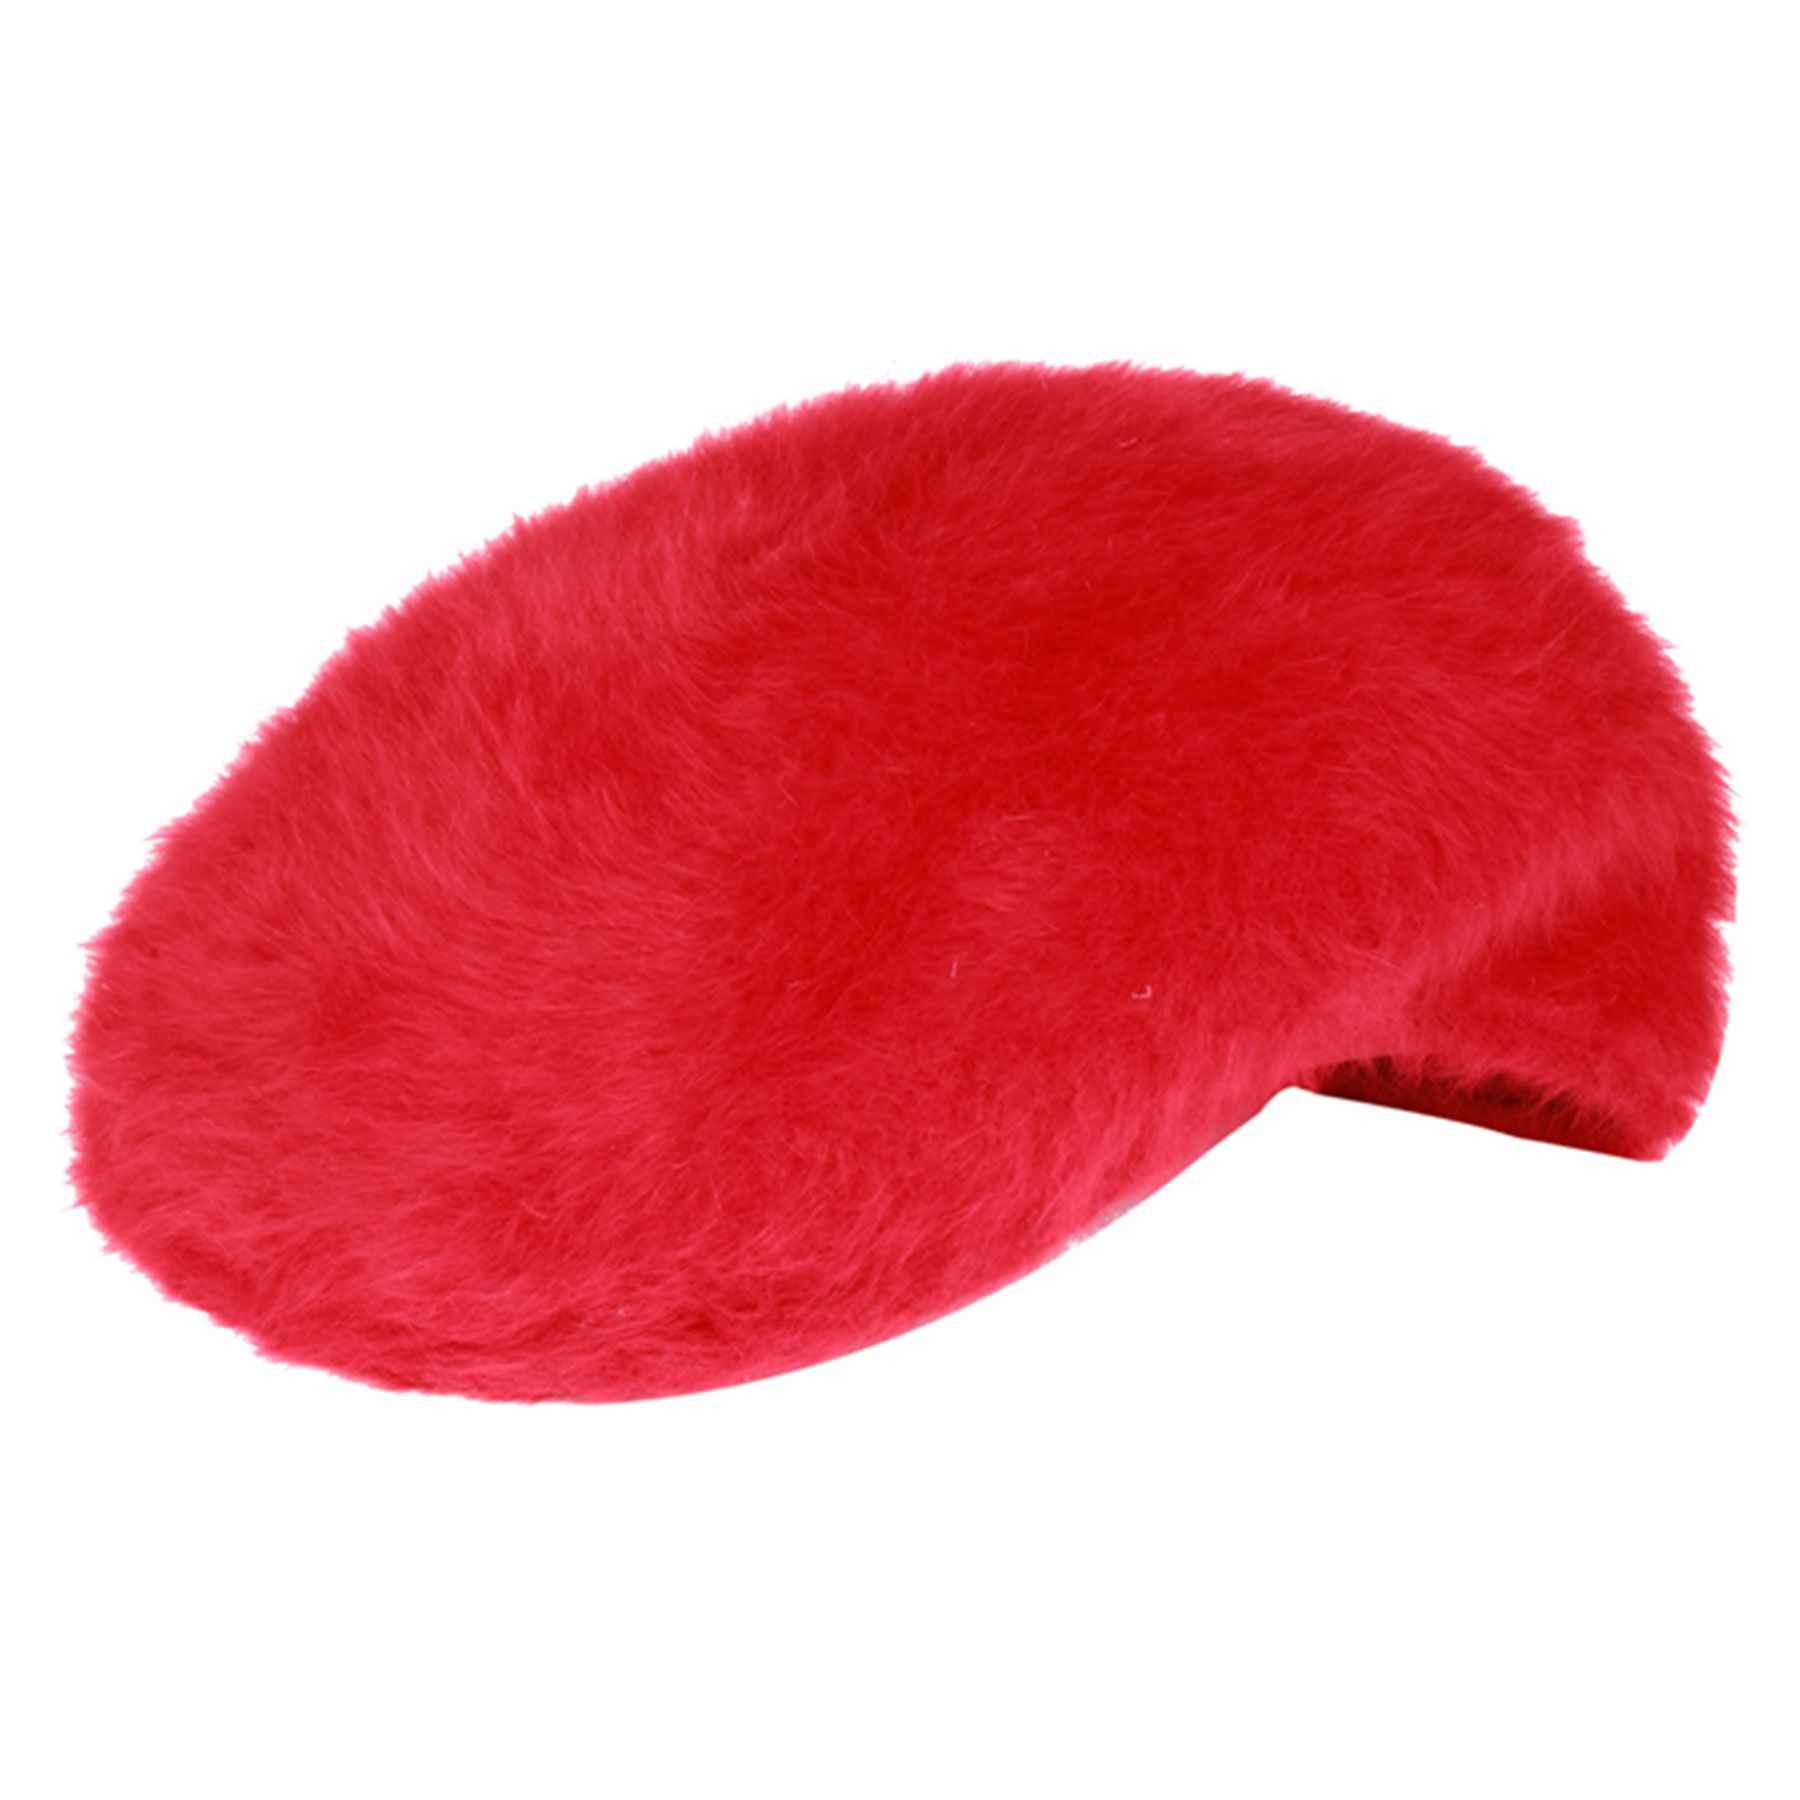 Kangol Red Furgora 504 Genuine Angora Rabbit Fur Cap